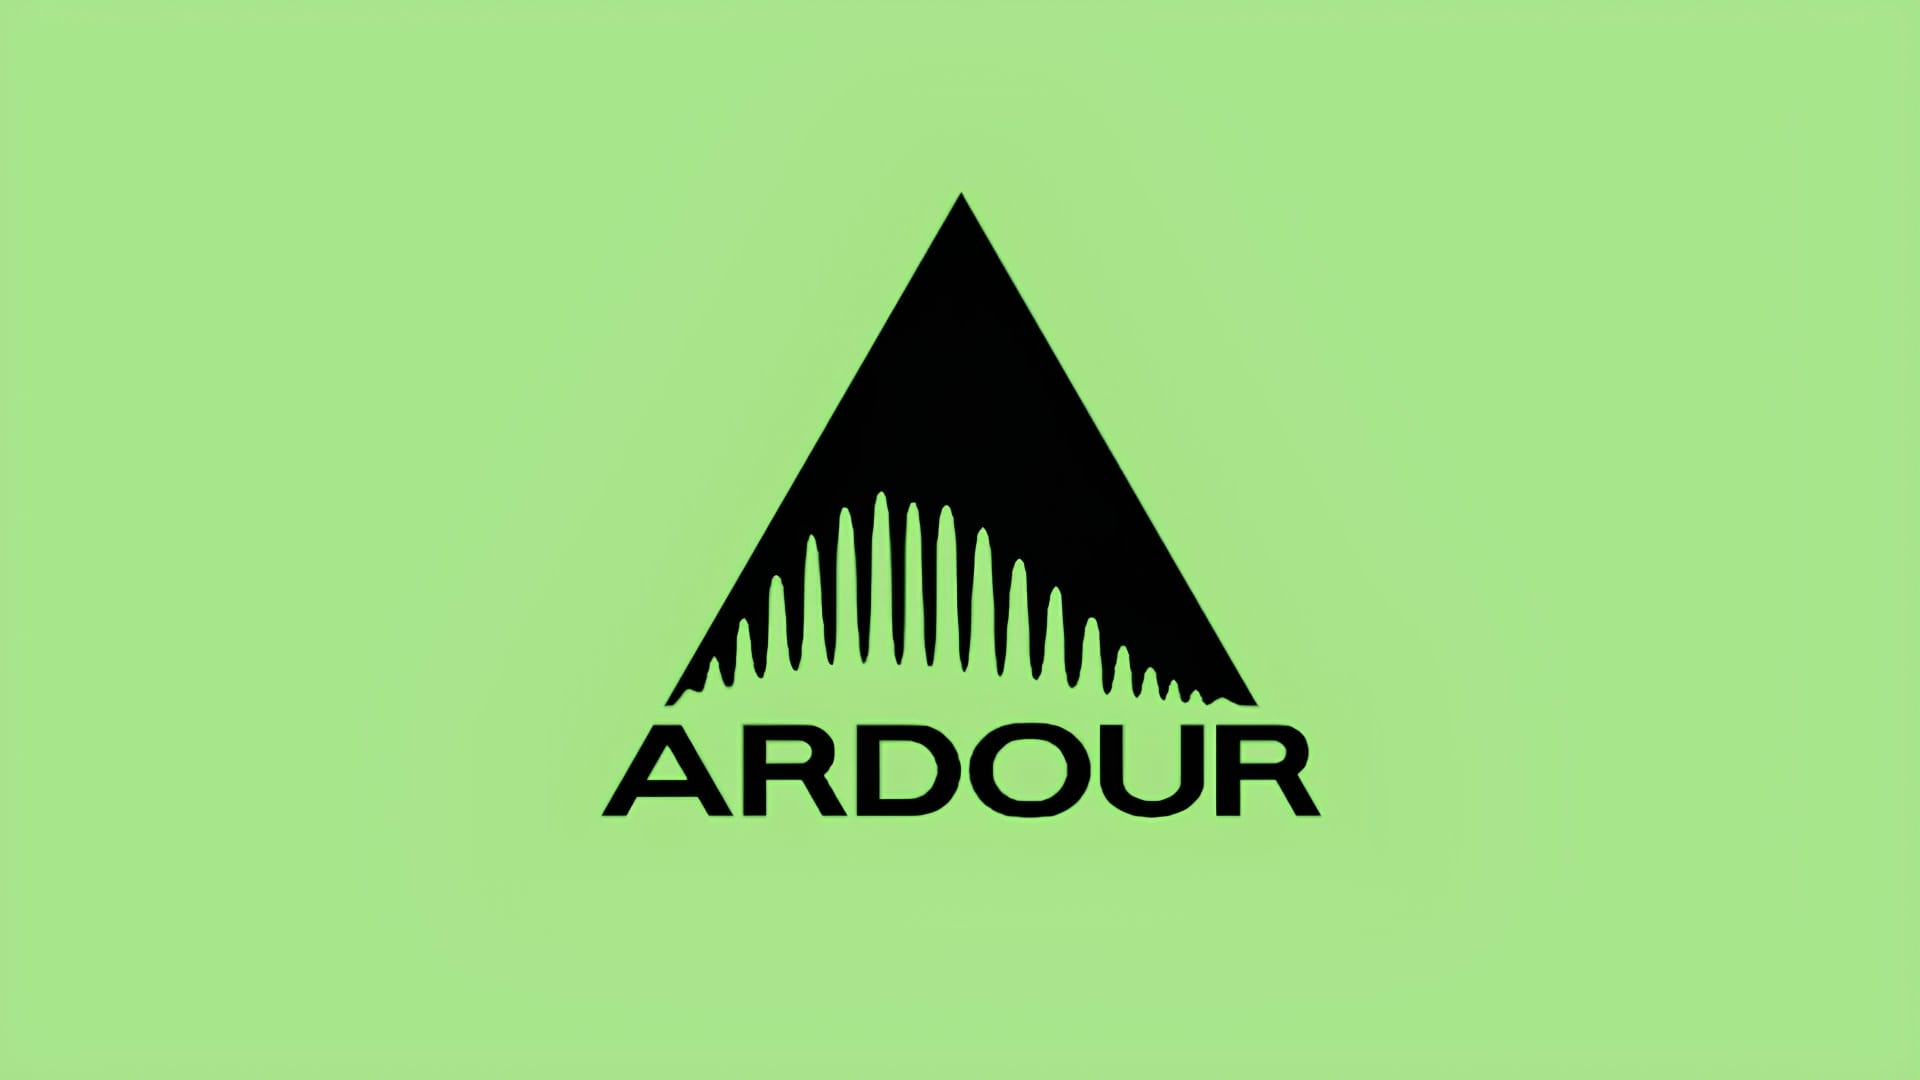 Install Ardour on Linux: Ubuntu, Fedora, CentOS, RHEL, etc.